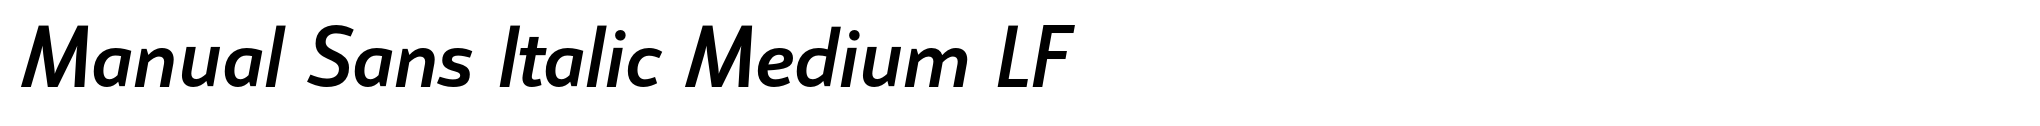 Manual Sans Italic Medium LF image